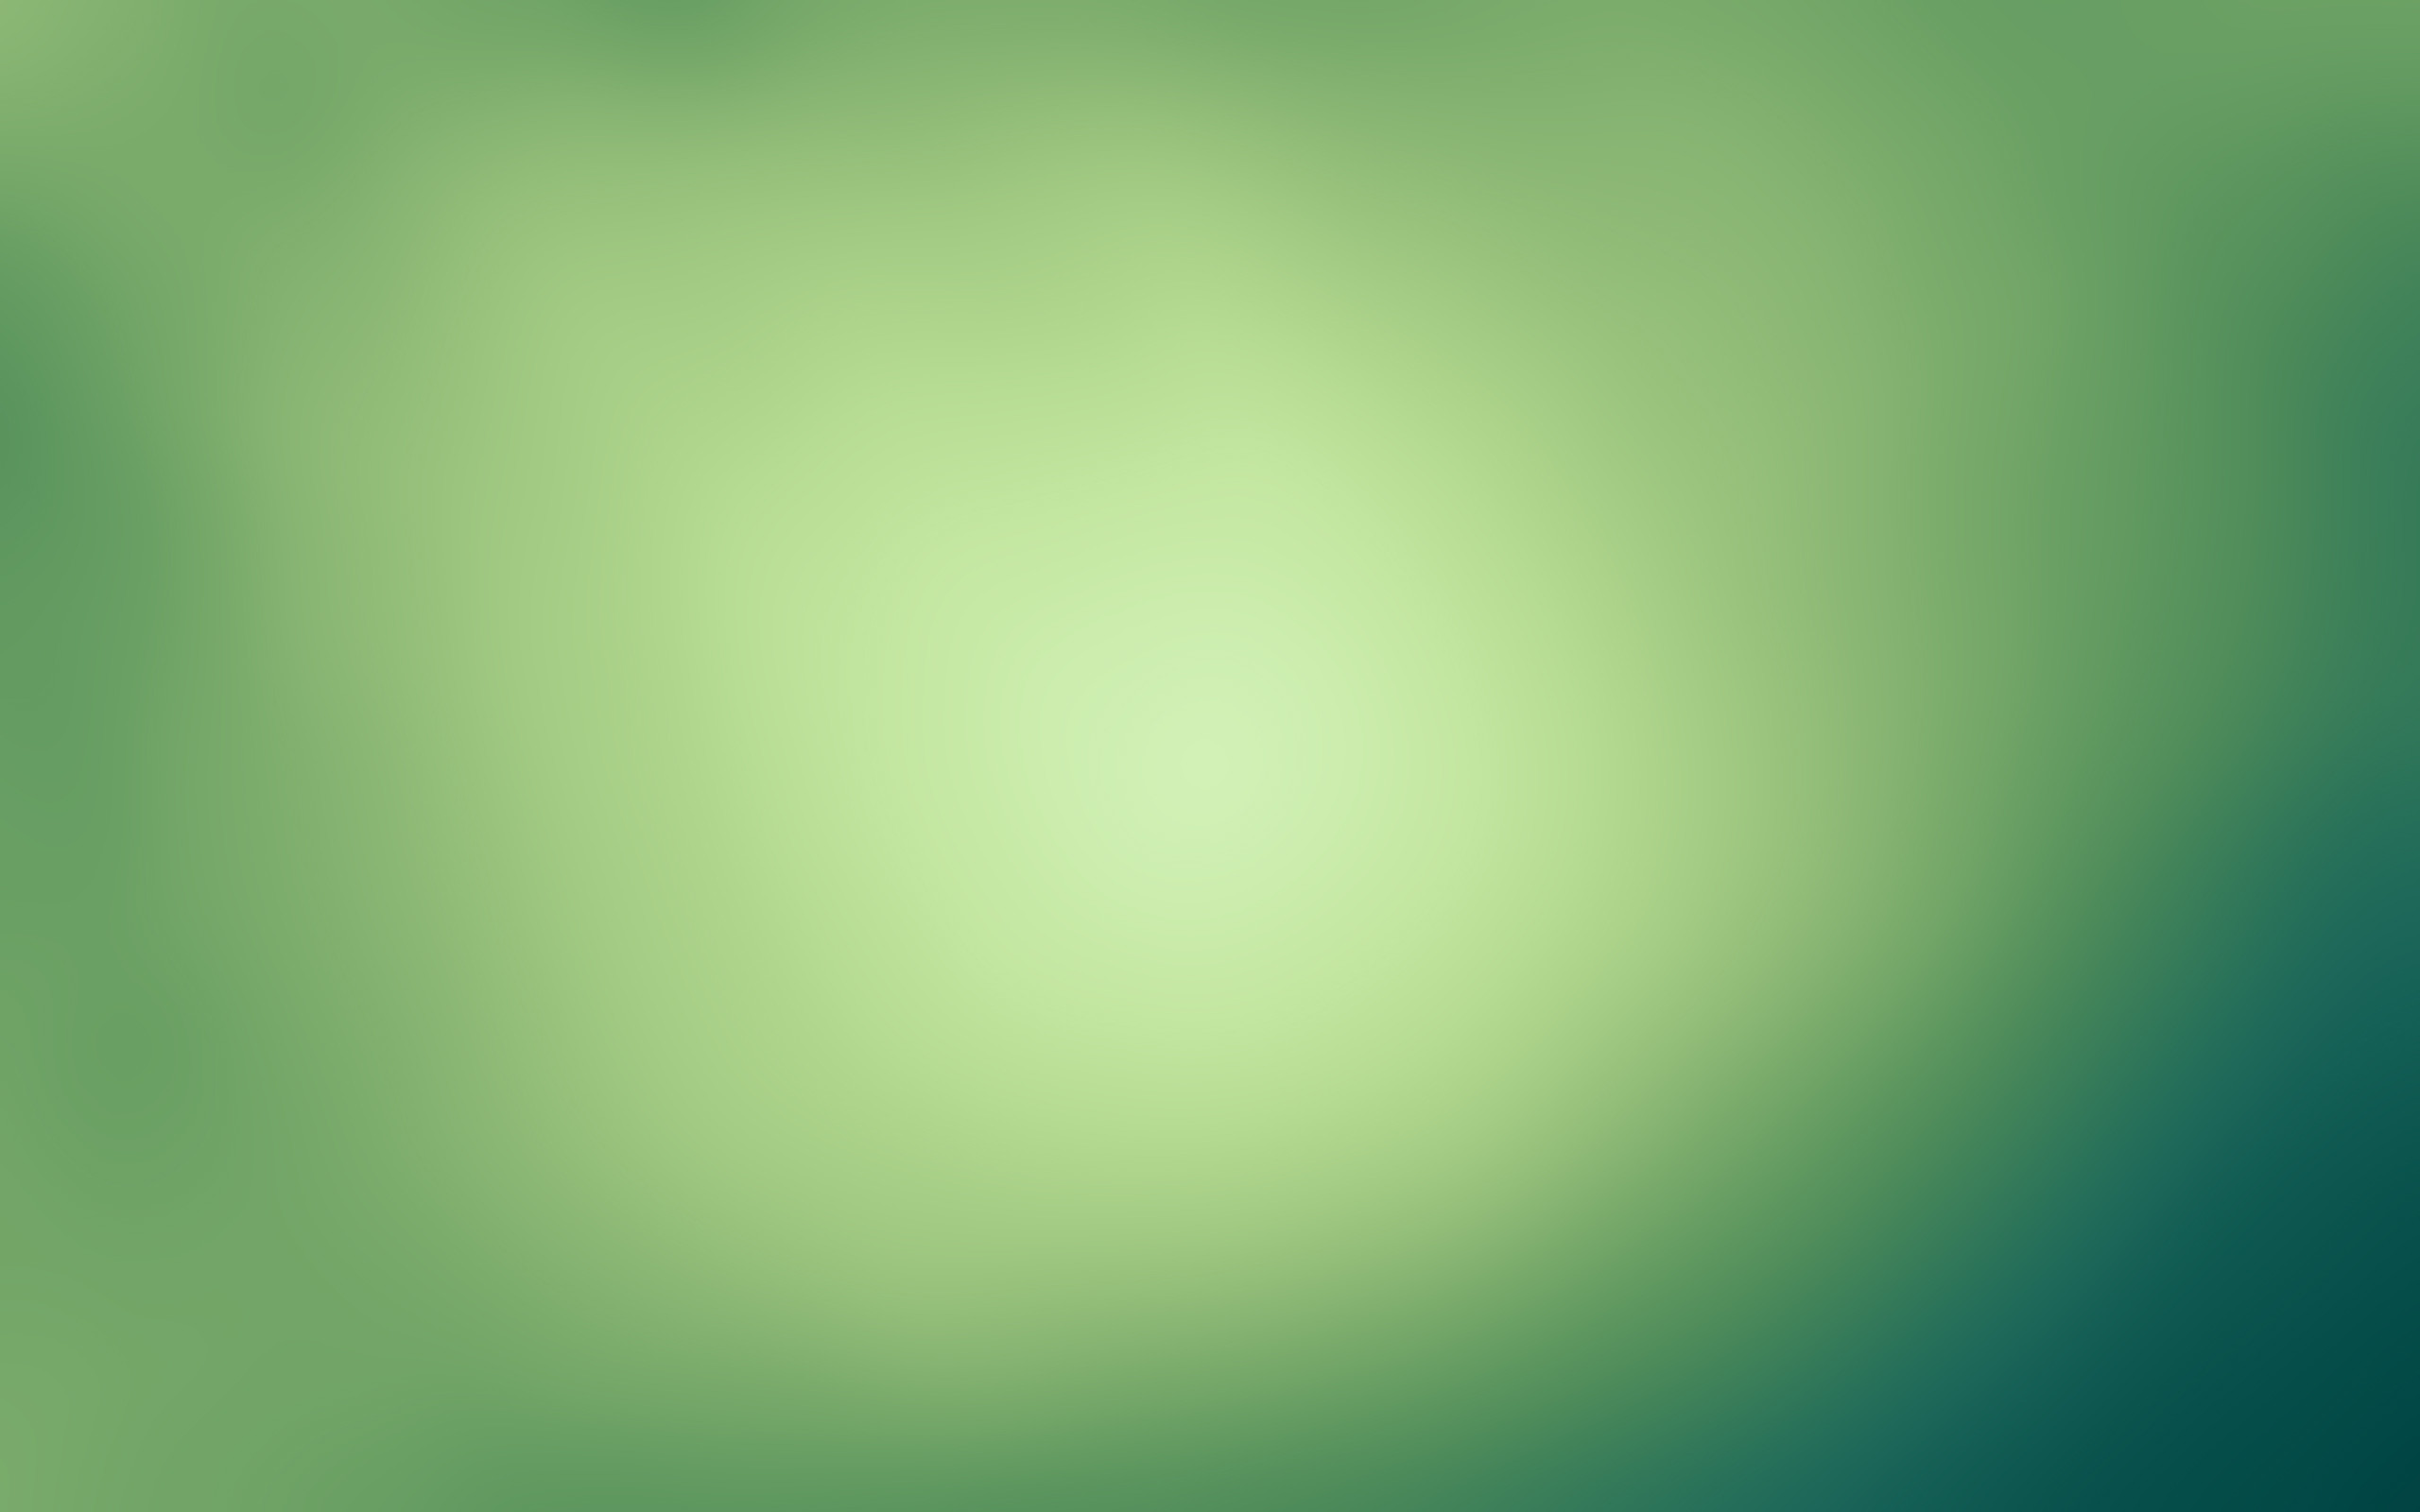 2560x1600 Wallpaper HD : green backround Green Background Color Html. Green  Background. Green Background Images. | Greenscapes | Pinterest | Green  backgrounds, ...